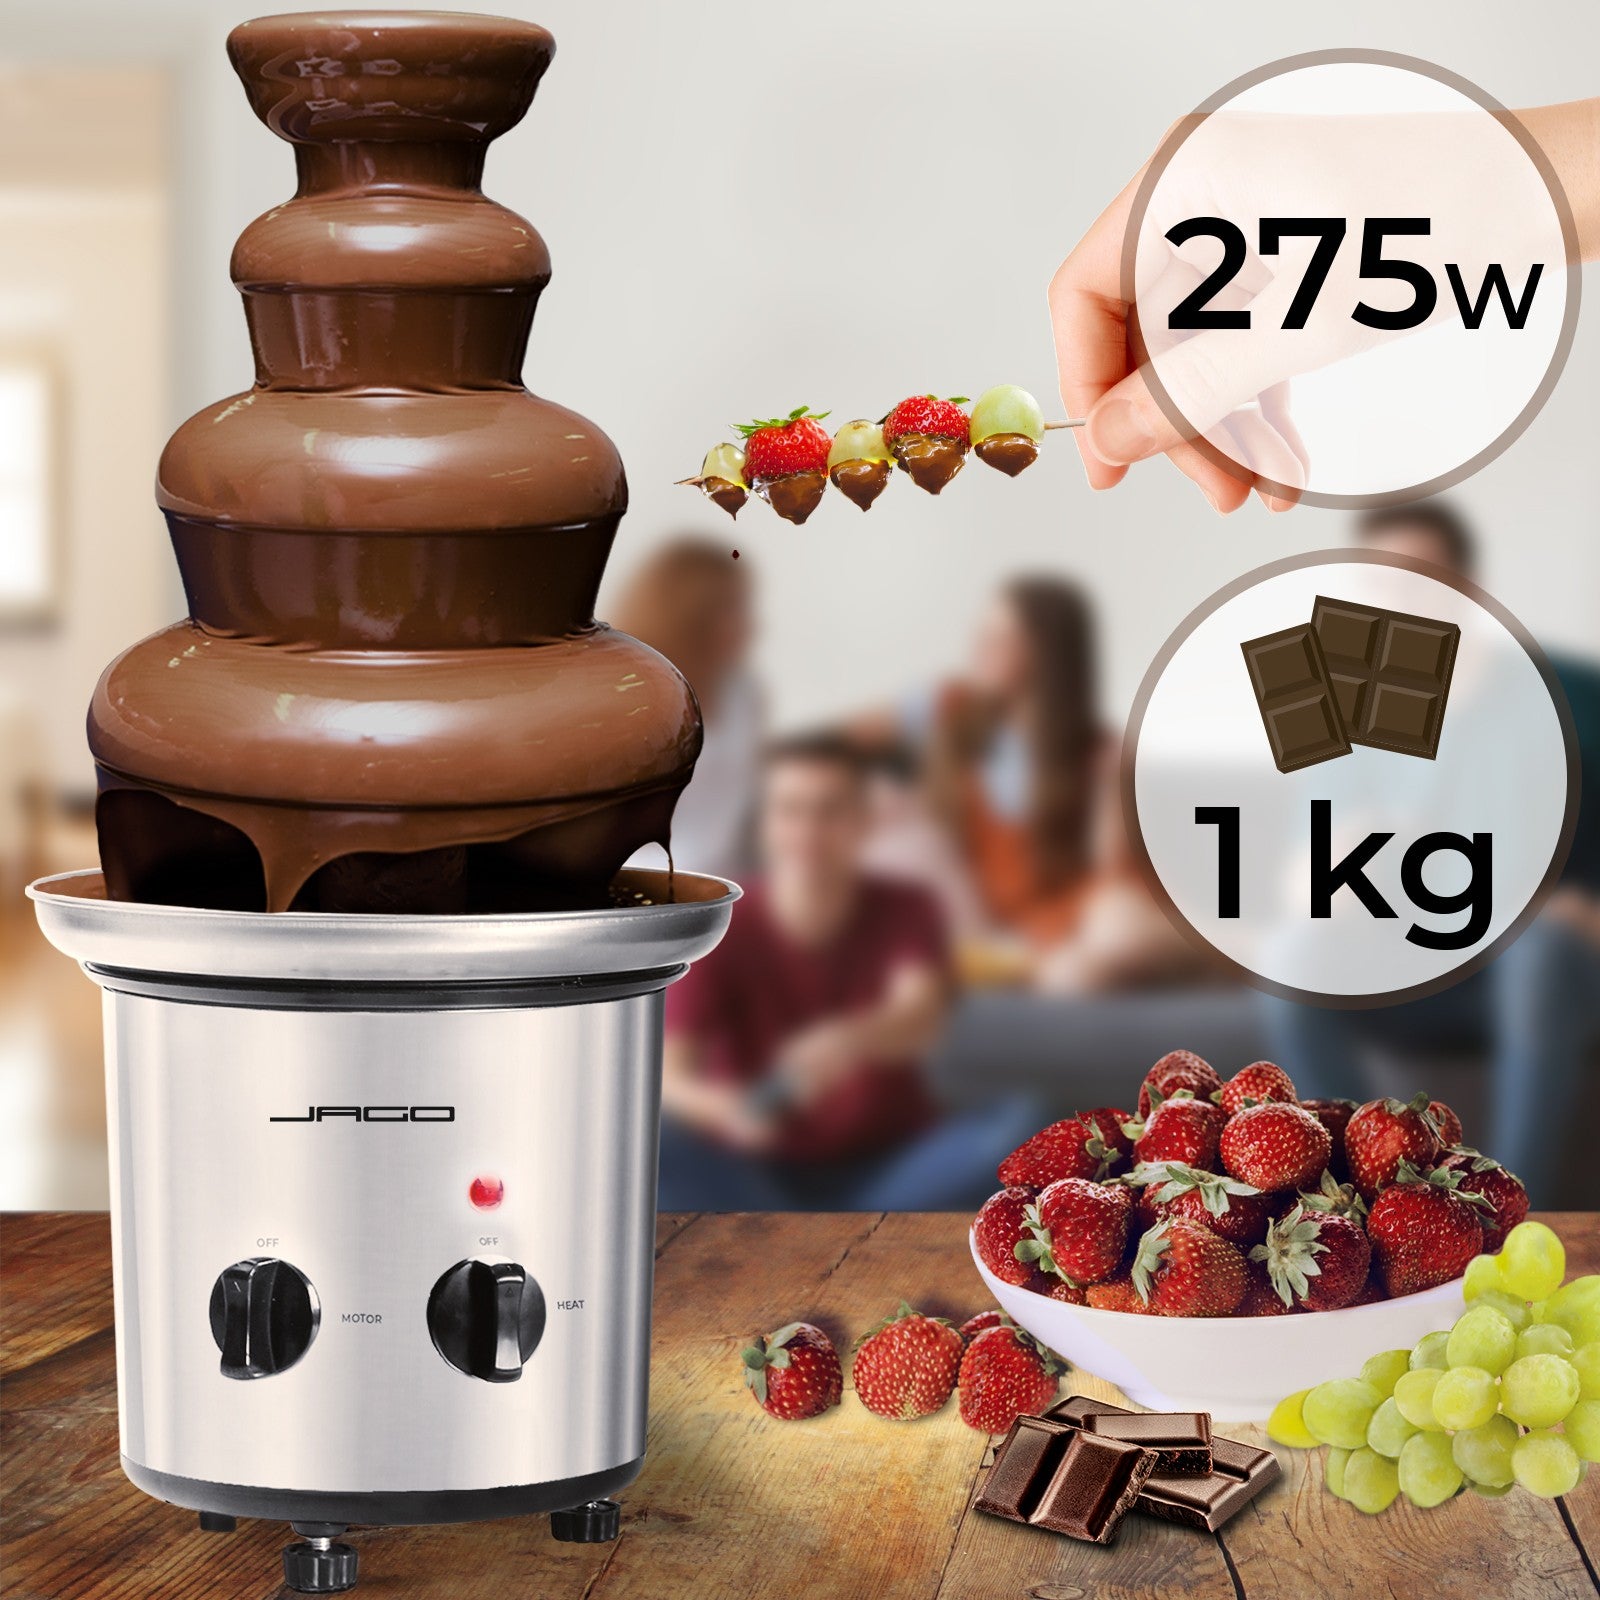 Billede af Chokoladefontæne 275W - 4 Etager, Maks. 1 kg Chokoladekapacitet, sølvfarvet